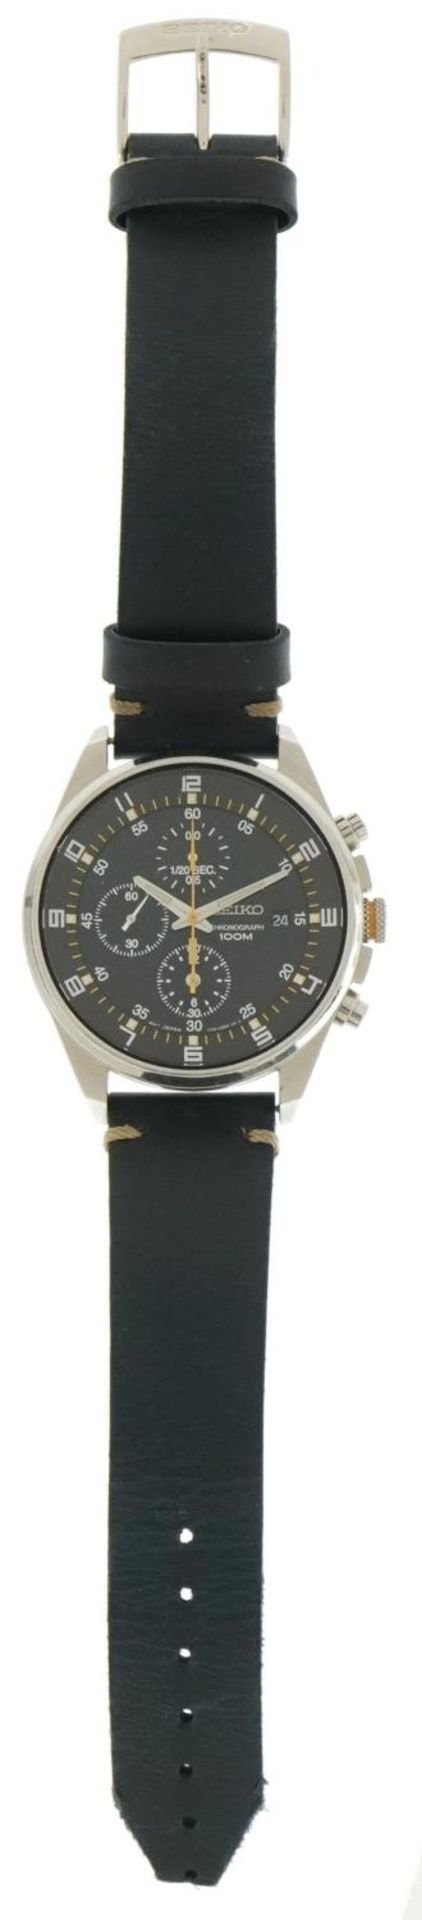 Seiko, gentlemen's Seiko chronograph wristwatch model 7792-0MF0, 40mm in diameter : For further - Image 2 of 5